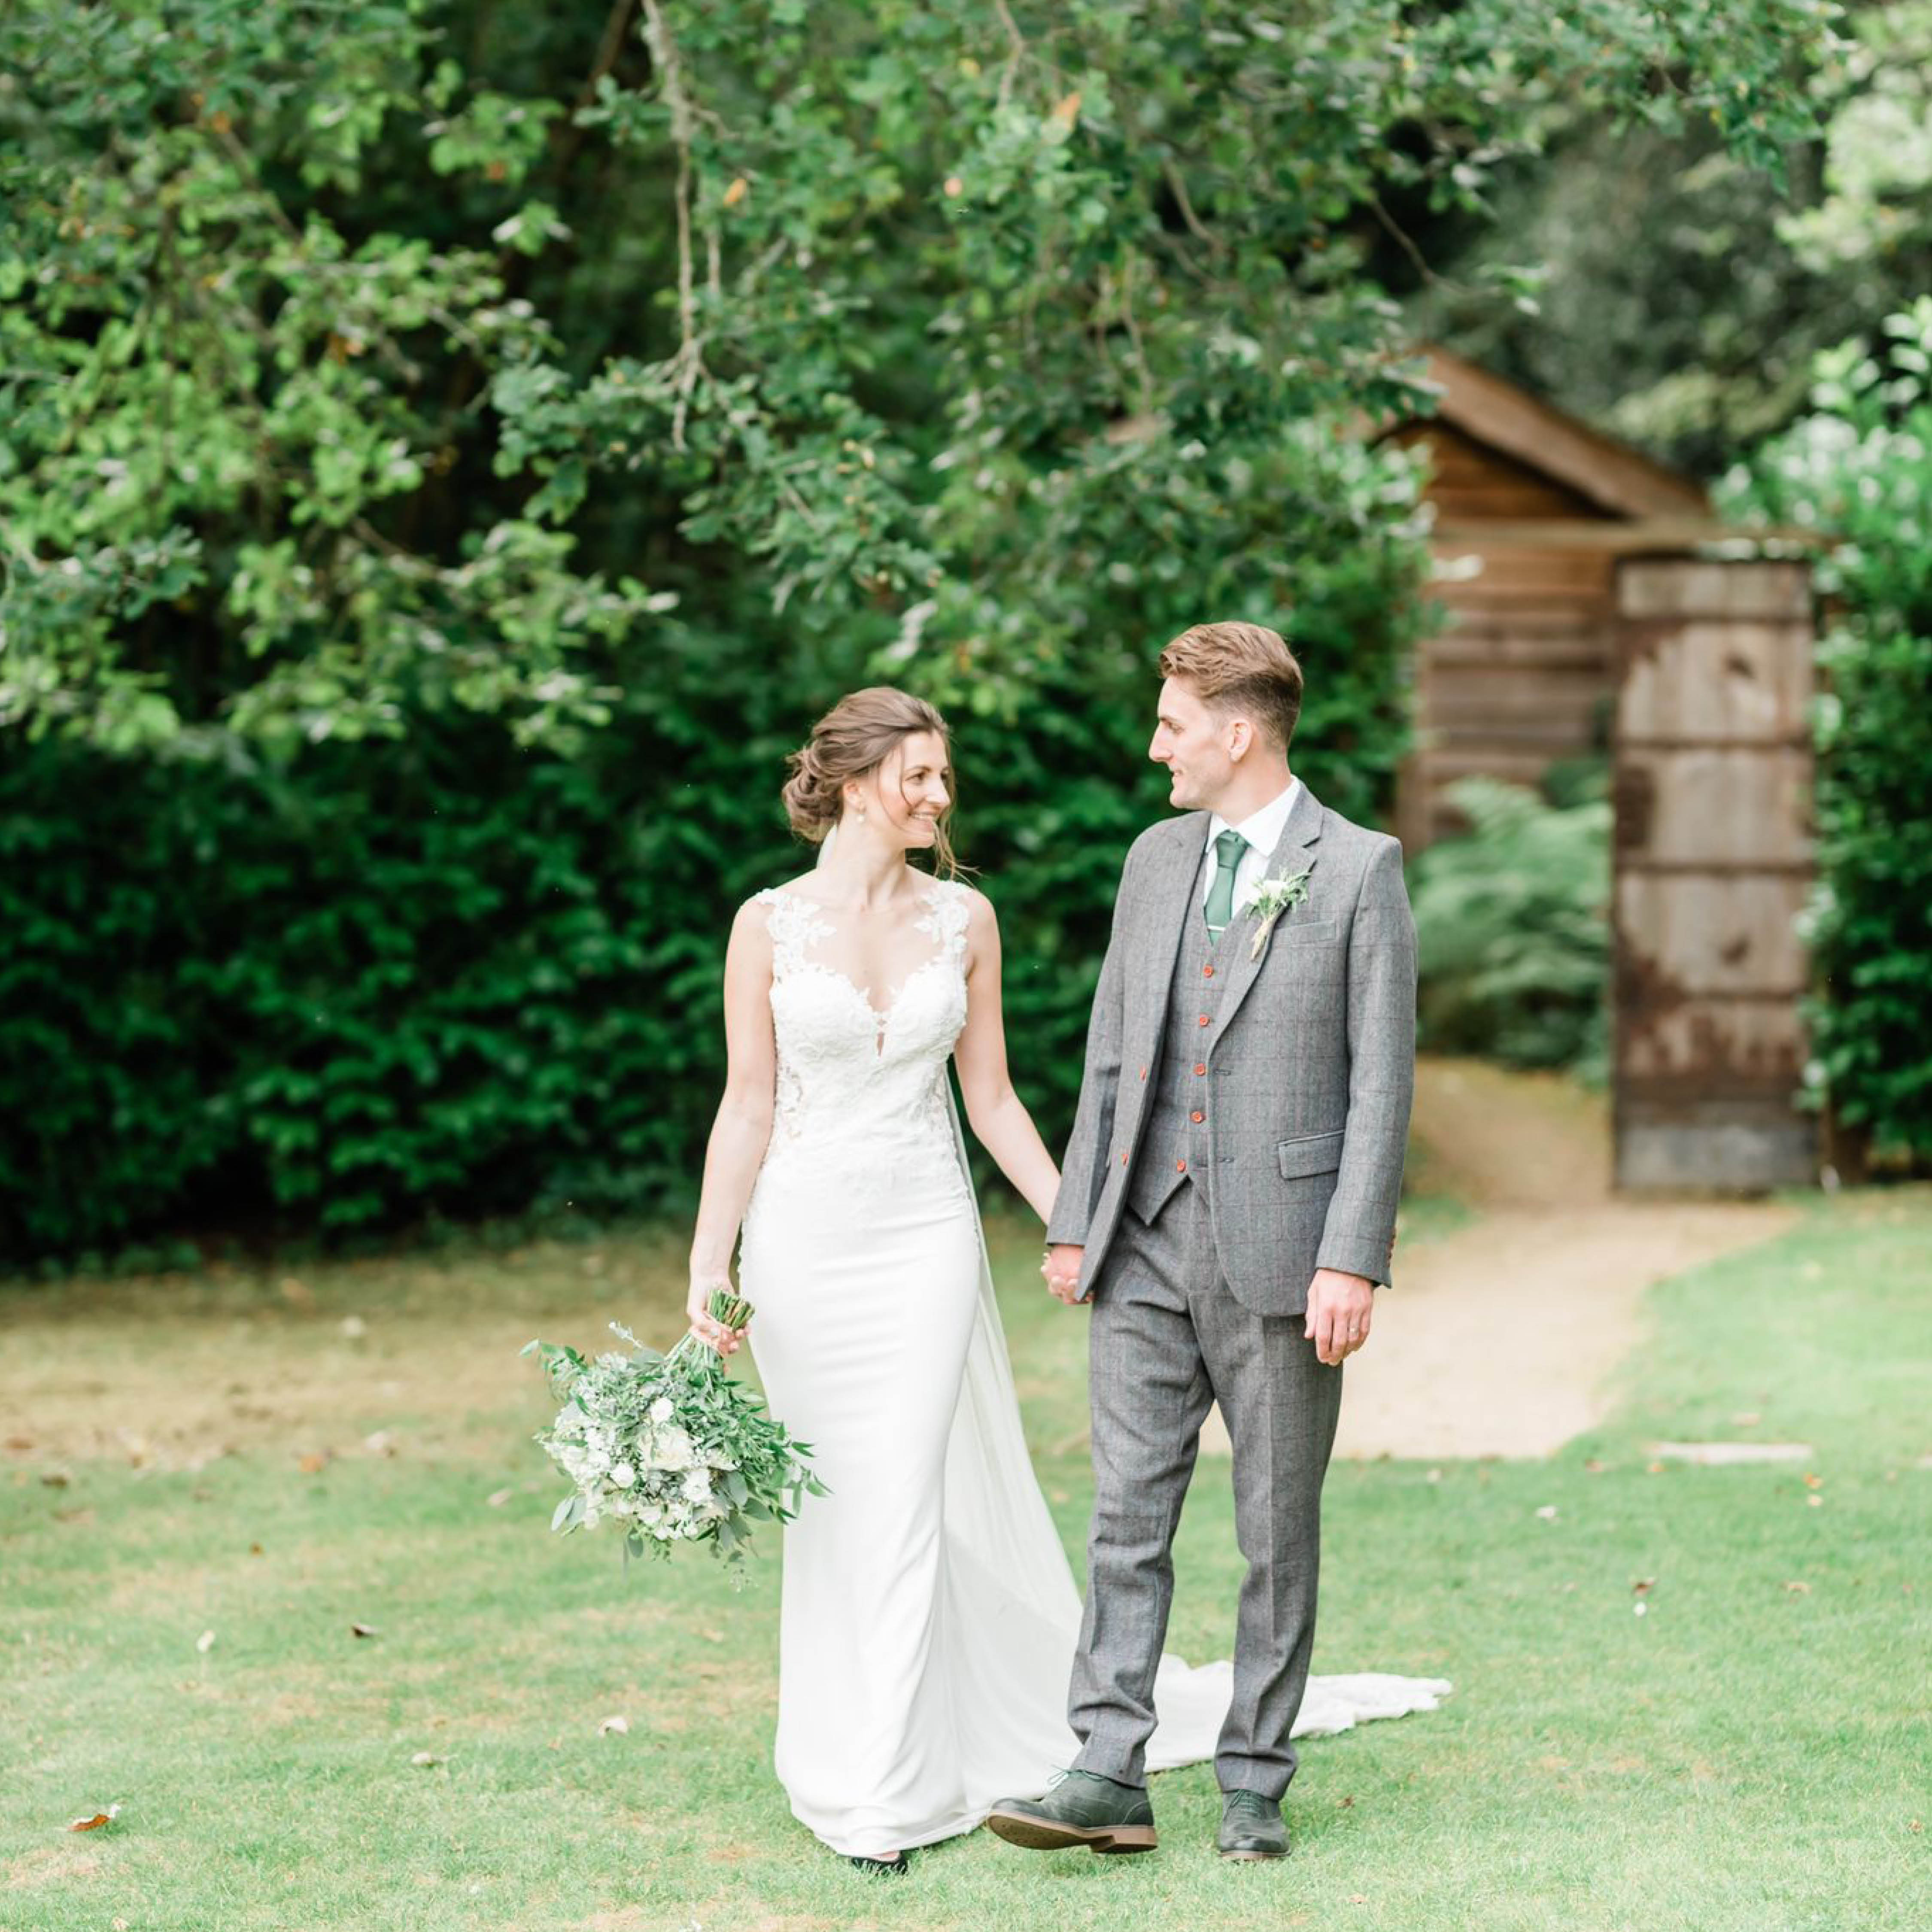 How to choose a Fantastic Wedding Theme, Millbridge Court, Surrey wedding venue